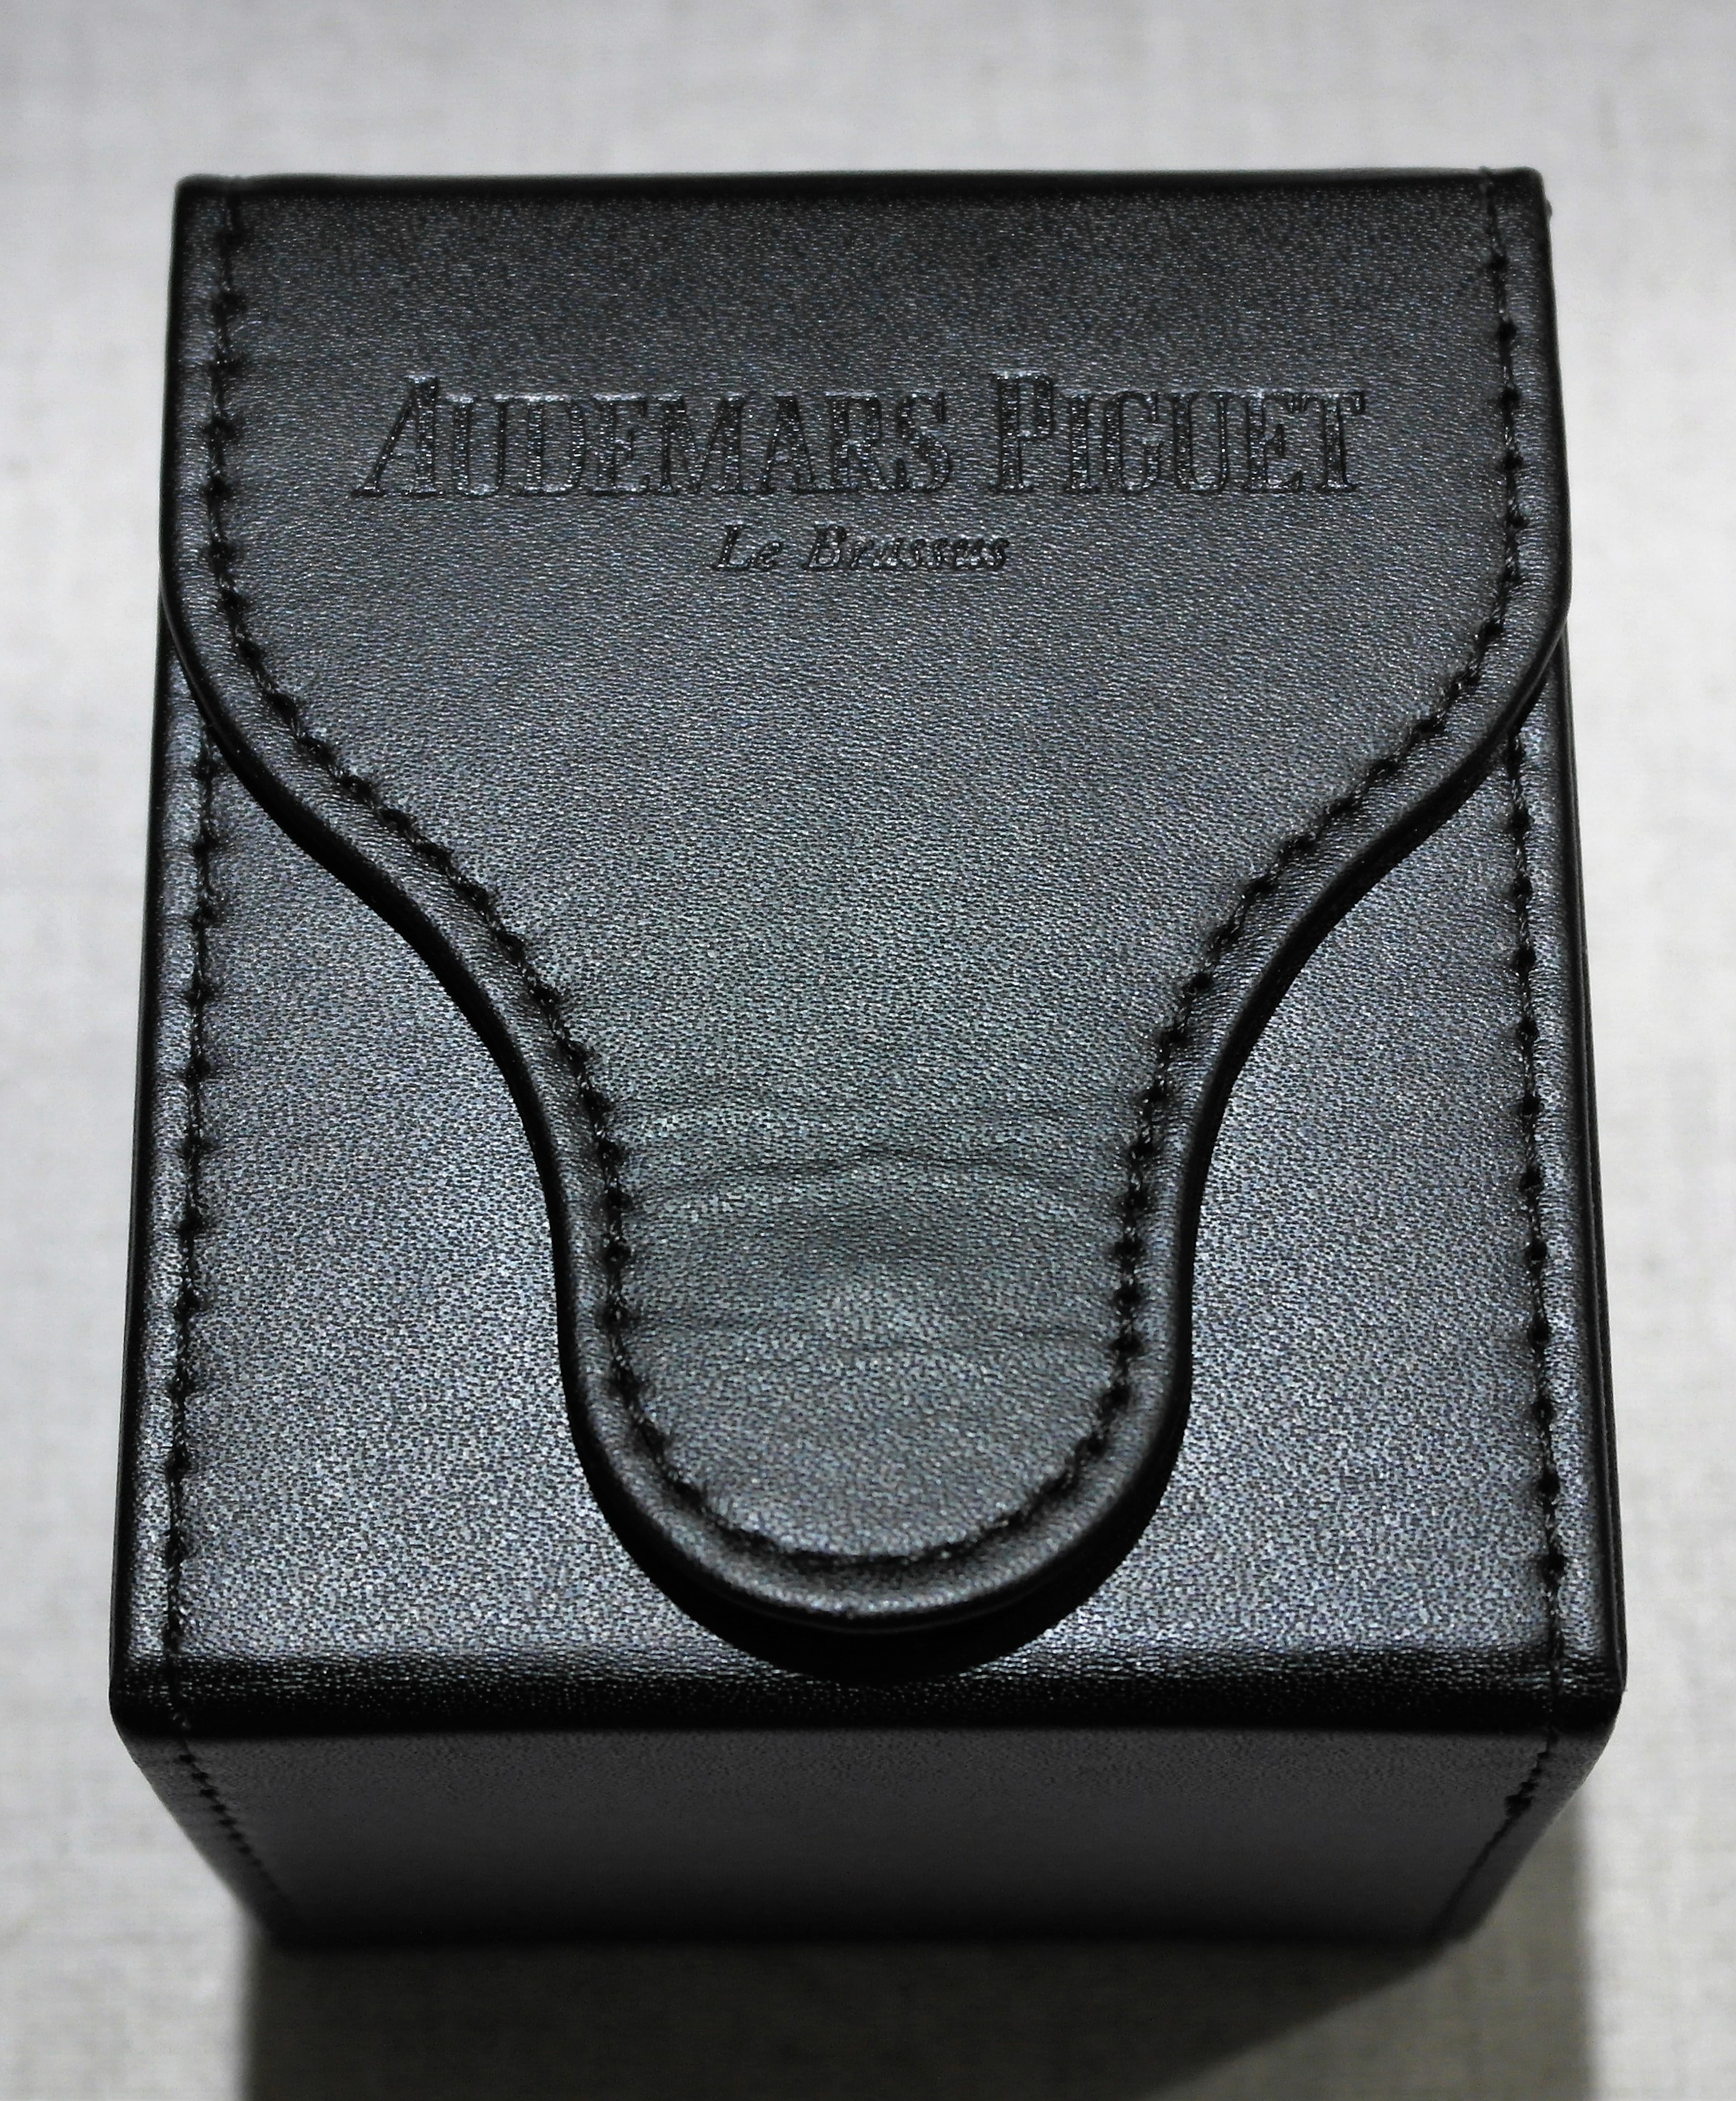 Audemars Piguet vintage travel watch box leather black newoldstock | San Giorgio a Cremano